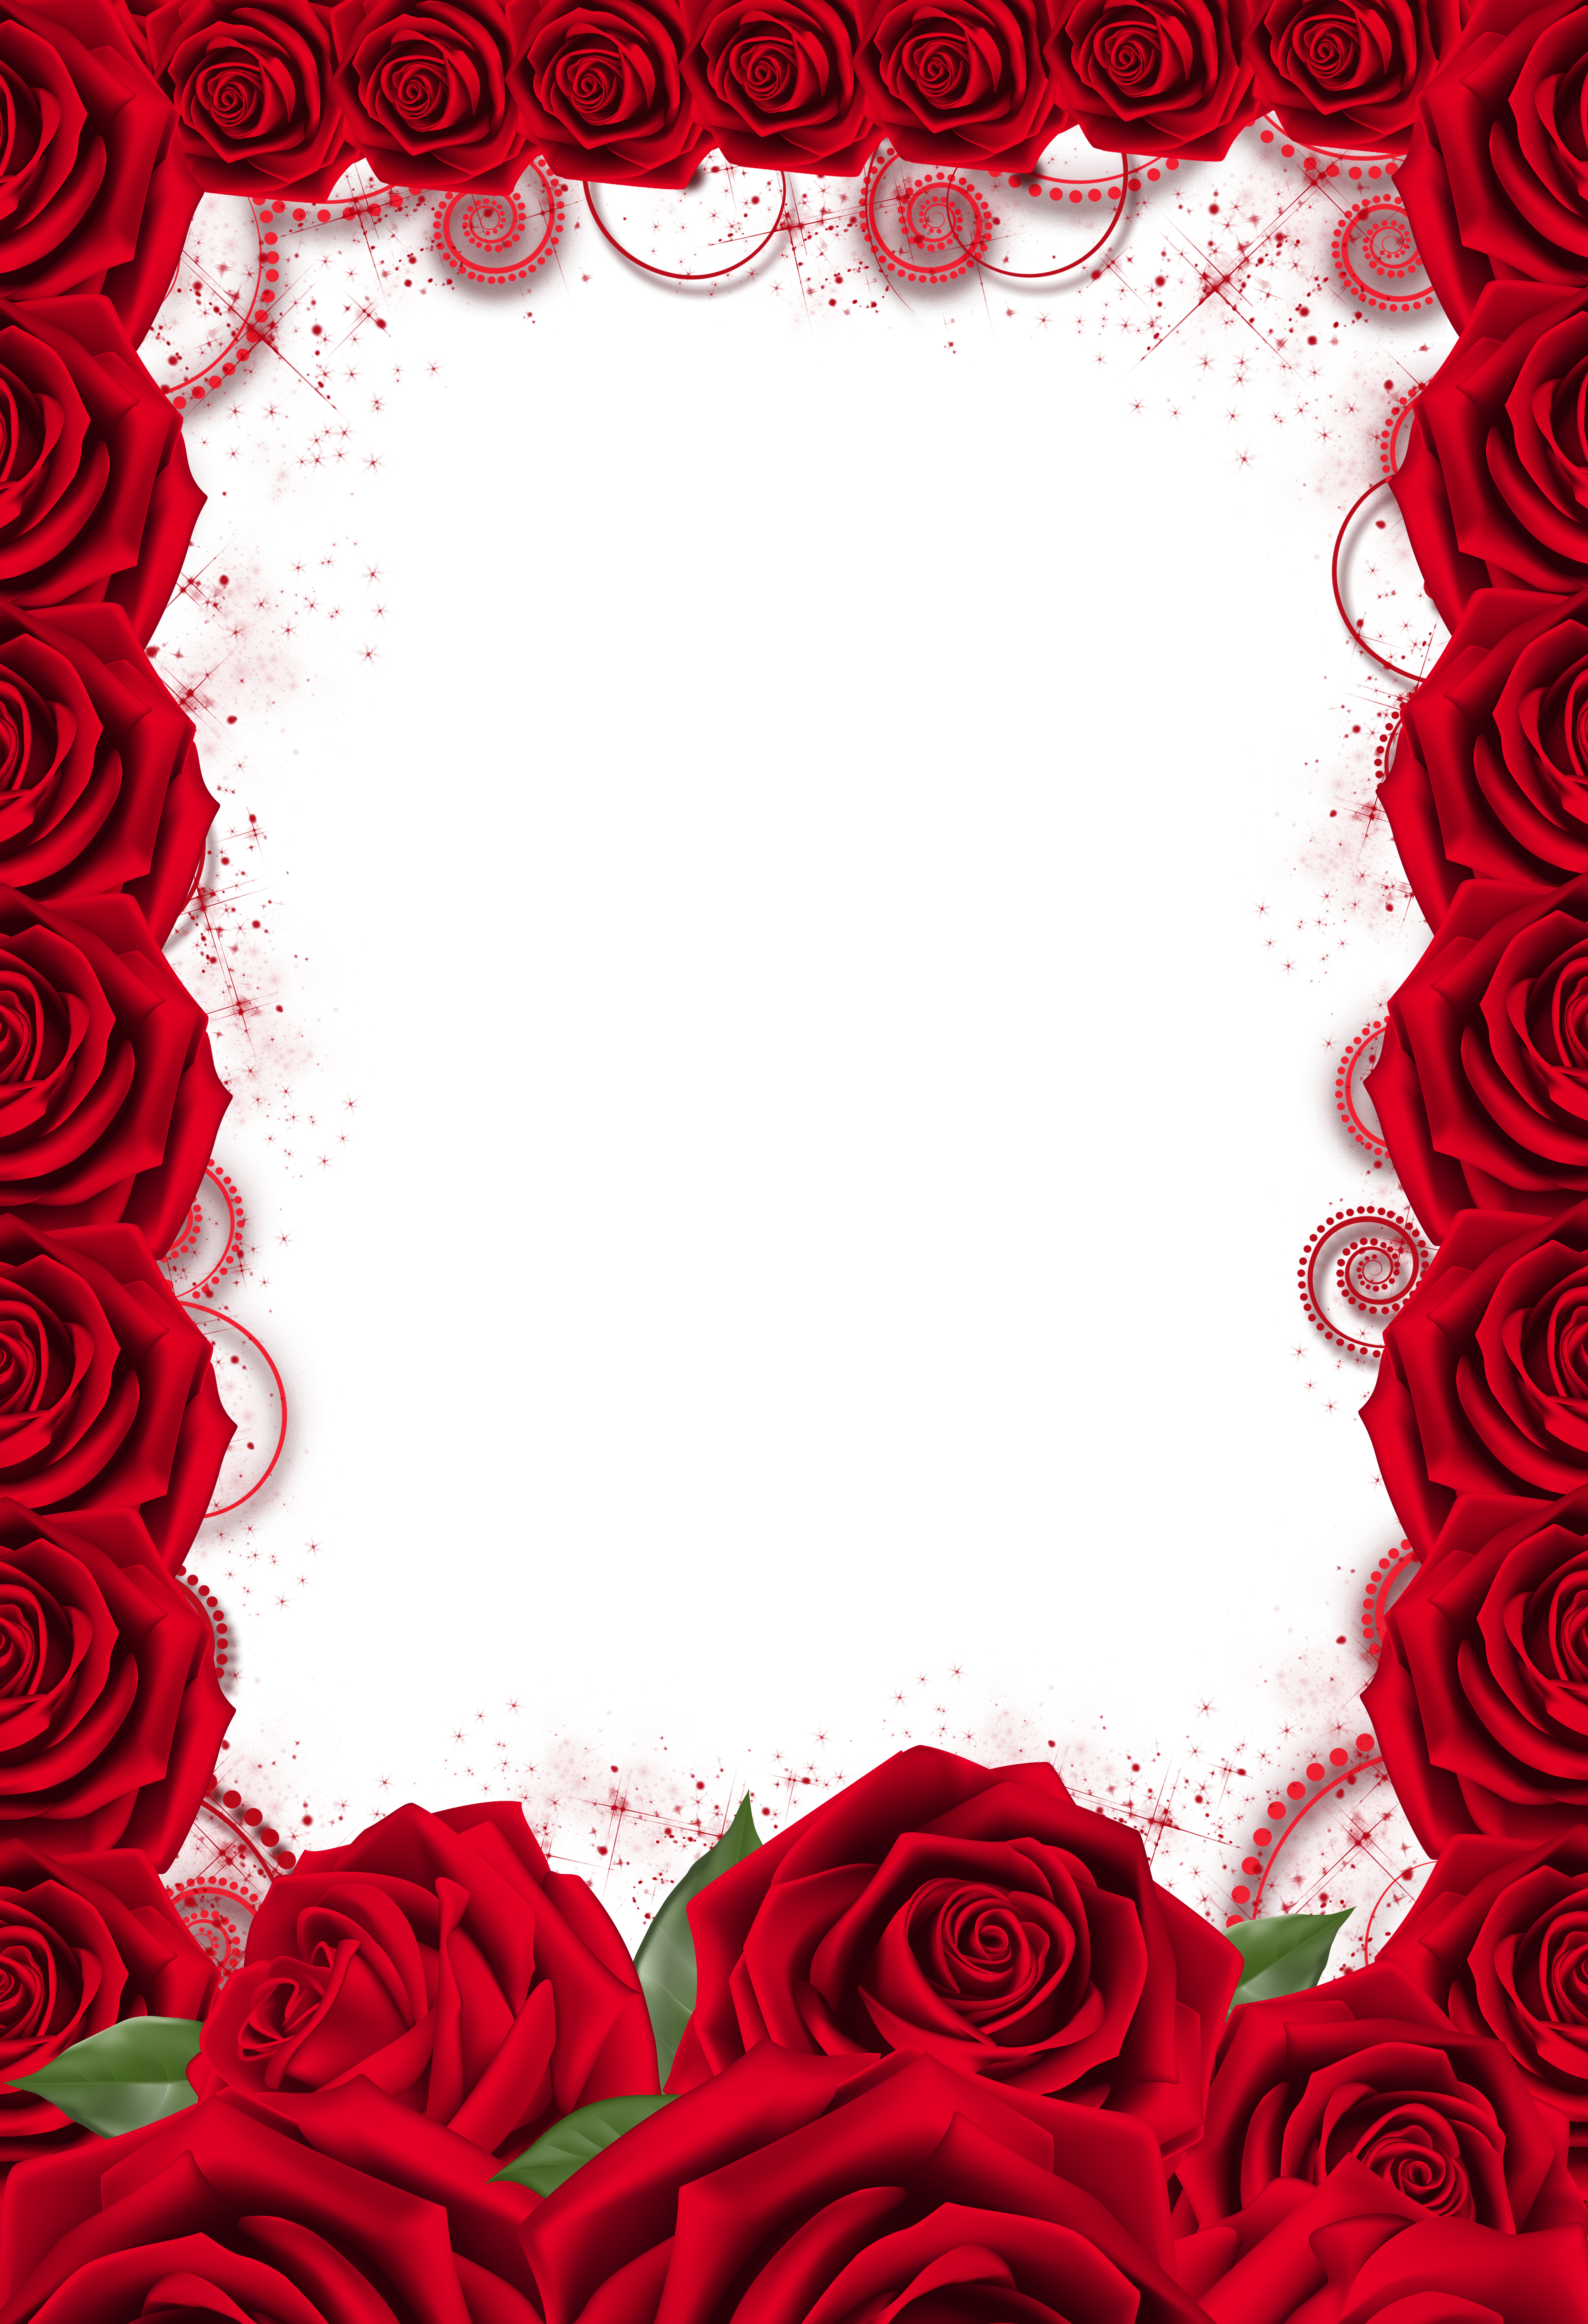 Red Rose Frame Gallery